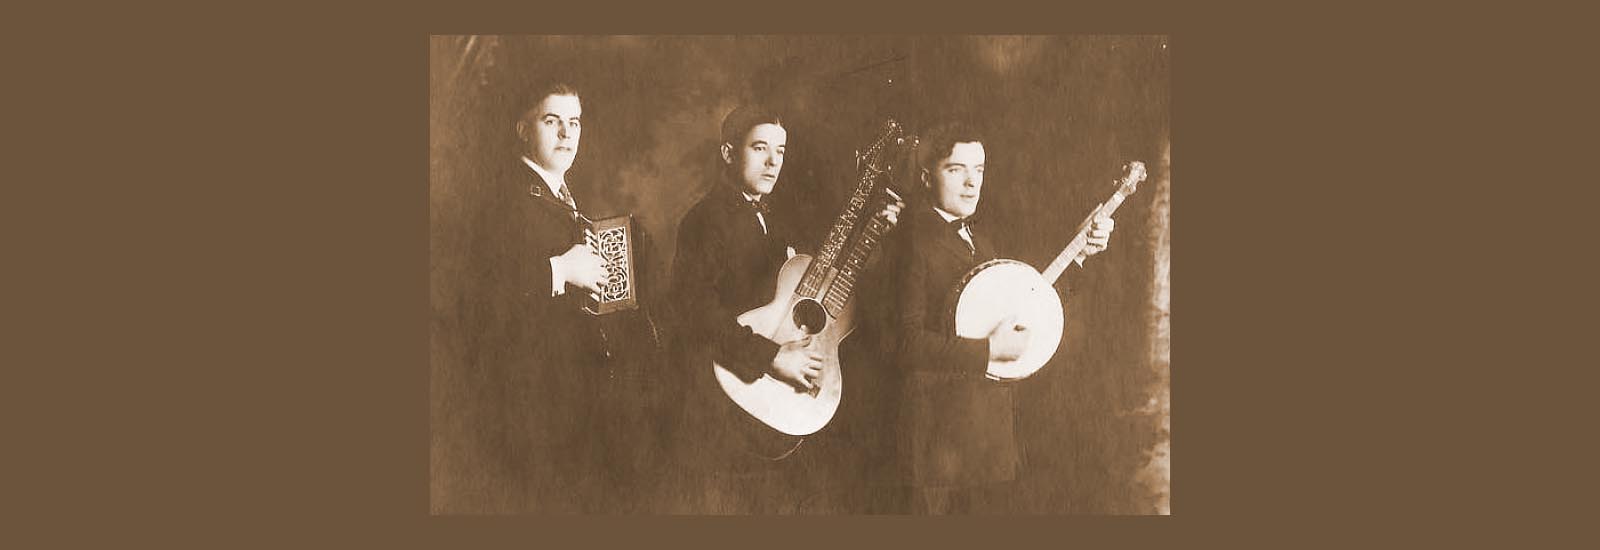 The Magnificent Flanagan Brothers - Ward Irish Music Archives